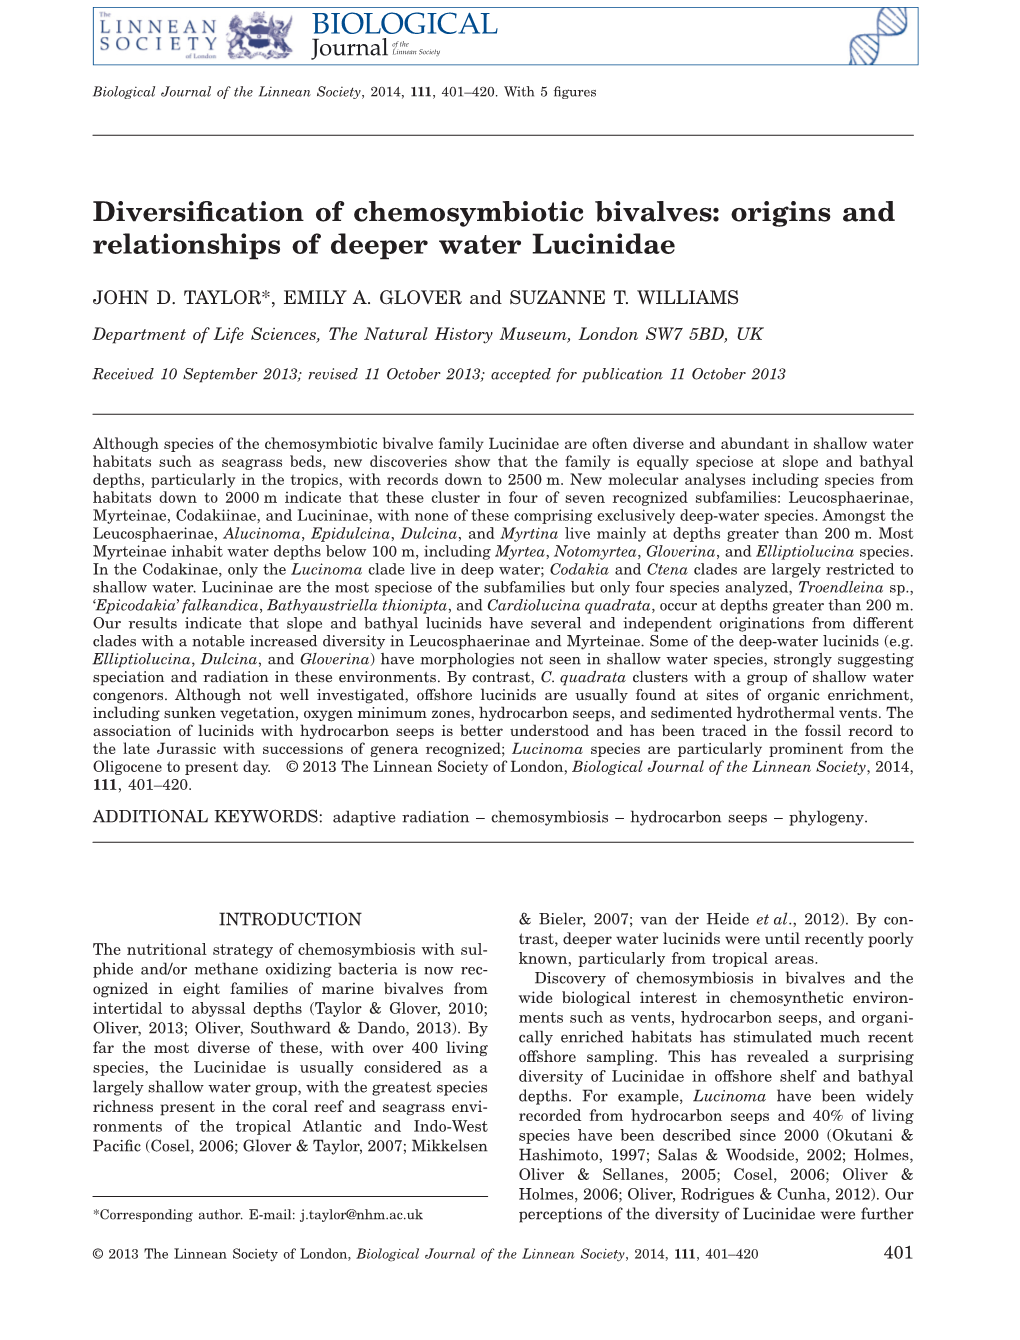 Diversification of Chemosymbiotic Bivalves: Origins and Relationships